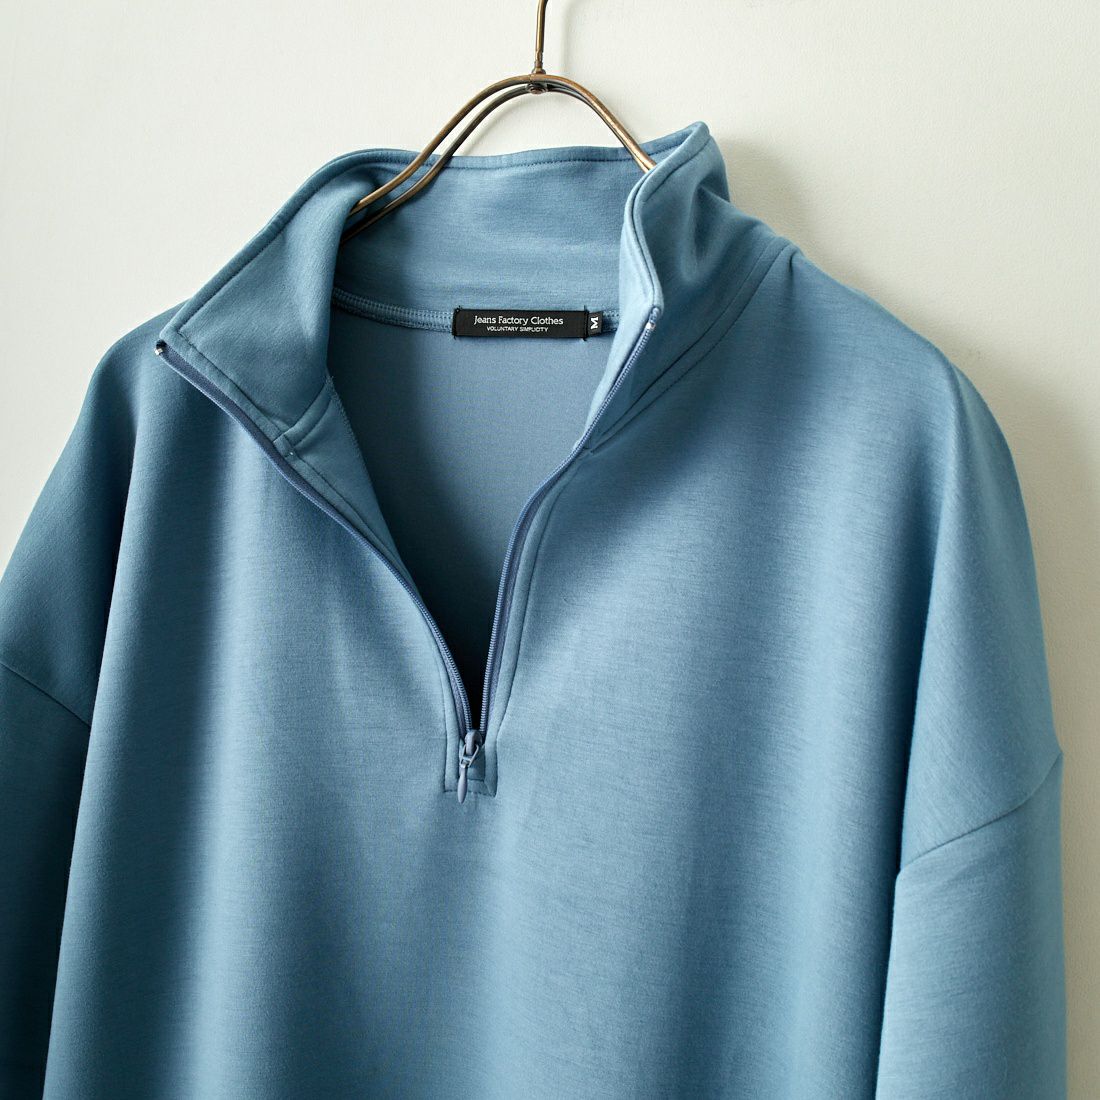 Jeans Factory Clothes [ジーンズファクトリークローズ] ハイポンチハーフジップTシャツ [JFC-232-061] BLUE